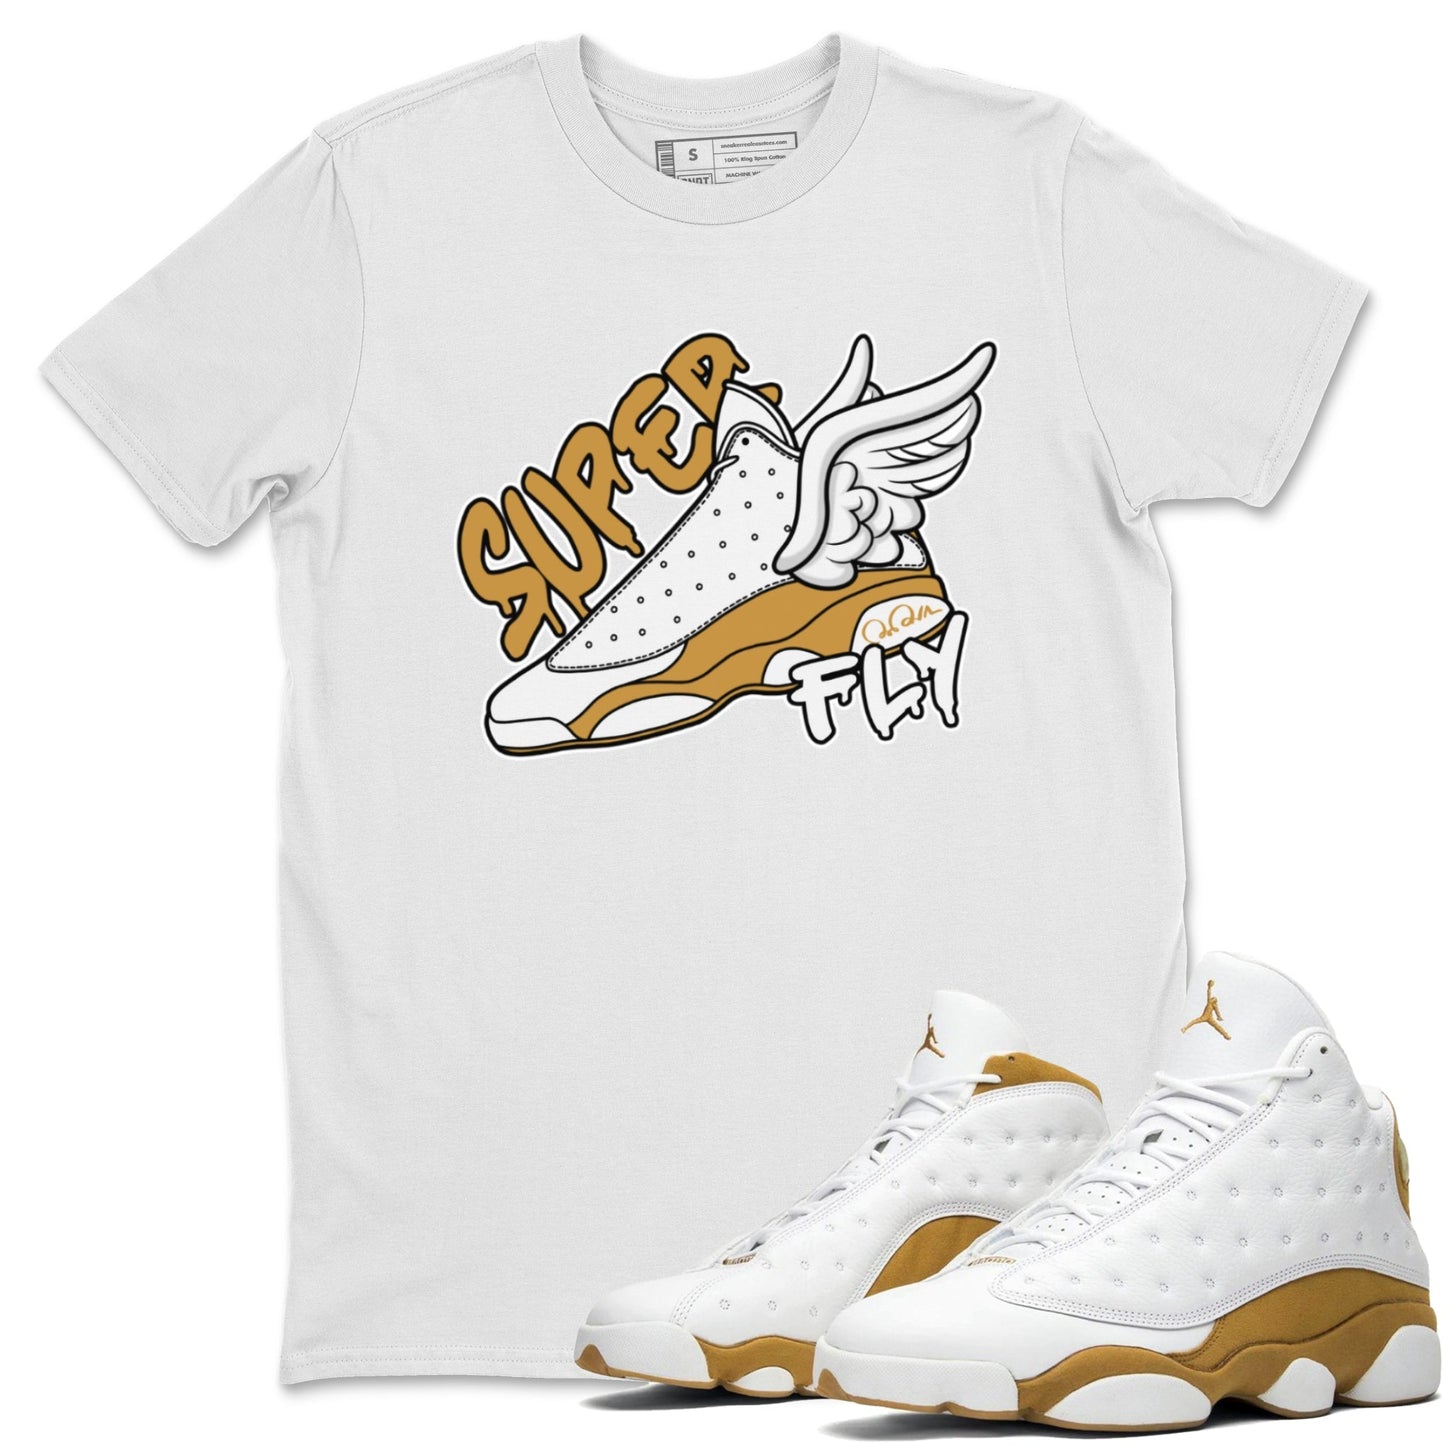 Air Jordan 13 Wheat Sneaker Match Tees Super Fly Sneaker Tees AJ13 Wheat Sneaker Release Tees Unisex Shirts White 1